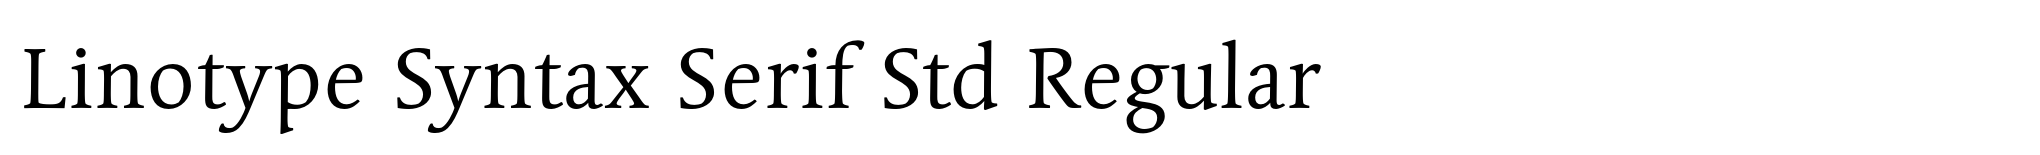 Linotype Syntax Serif Std Regular image